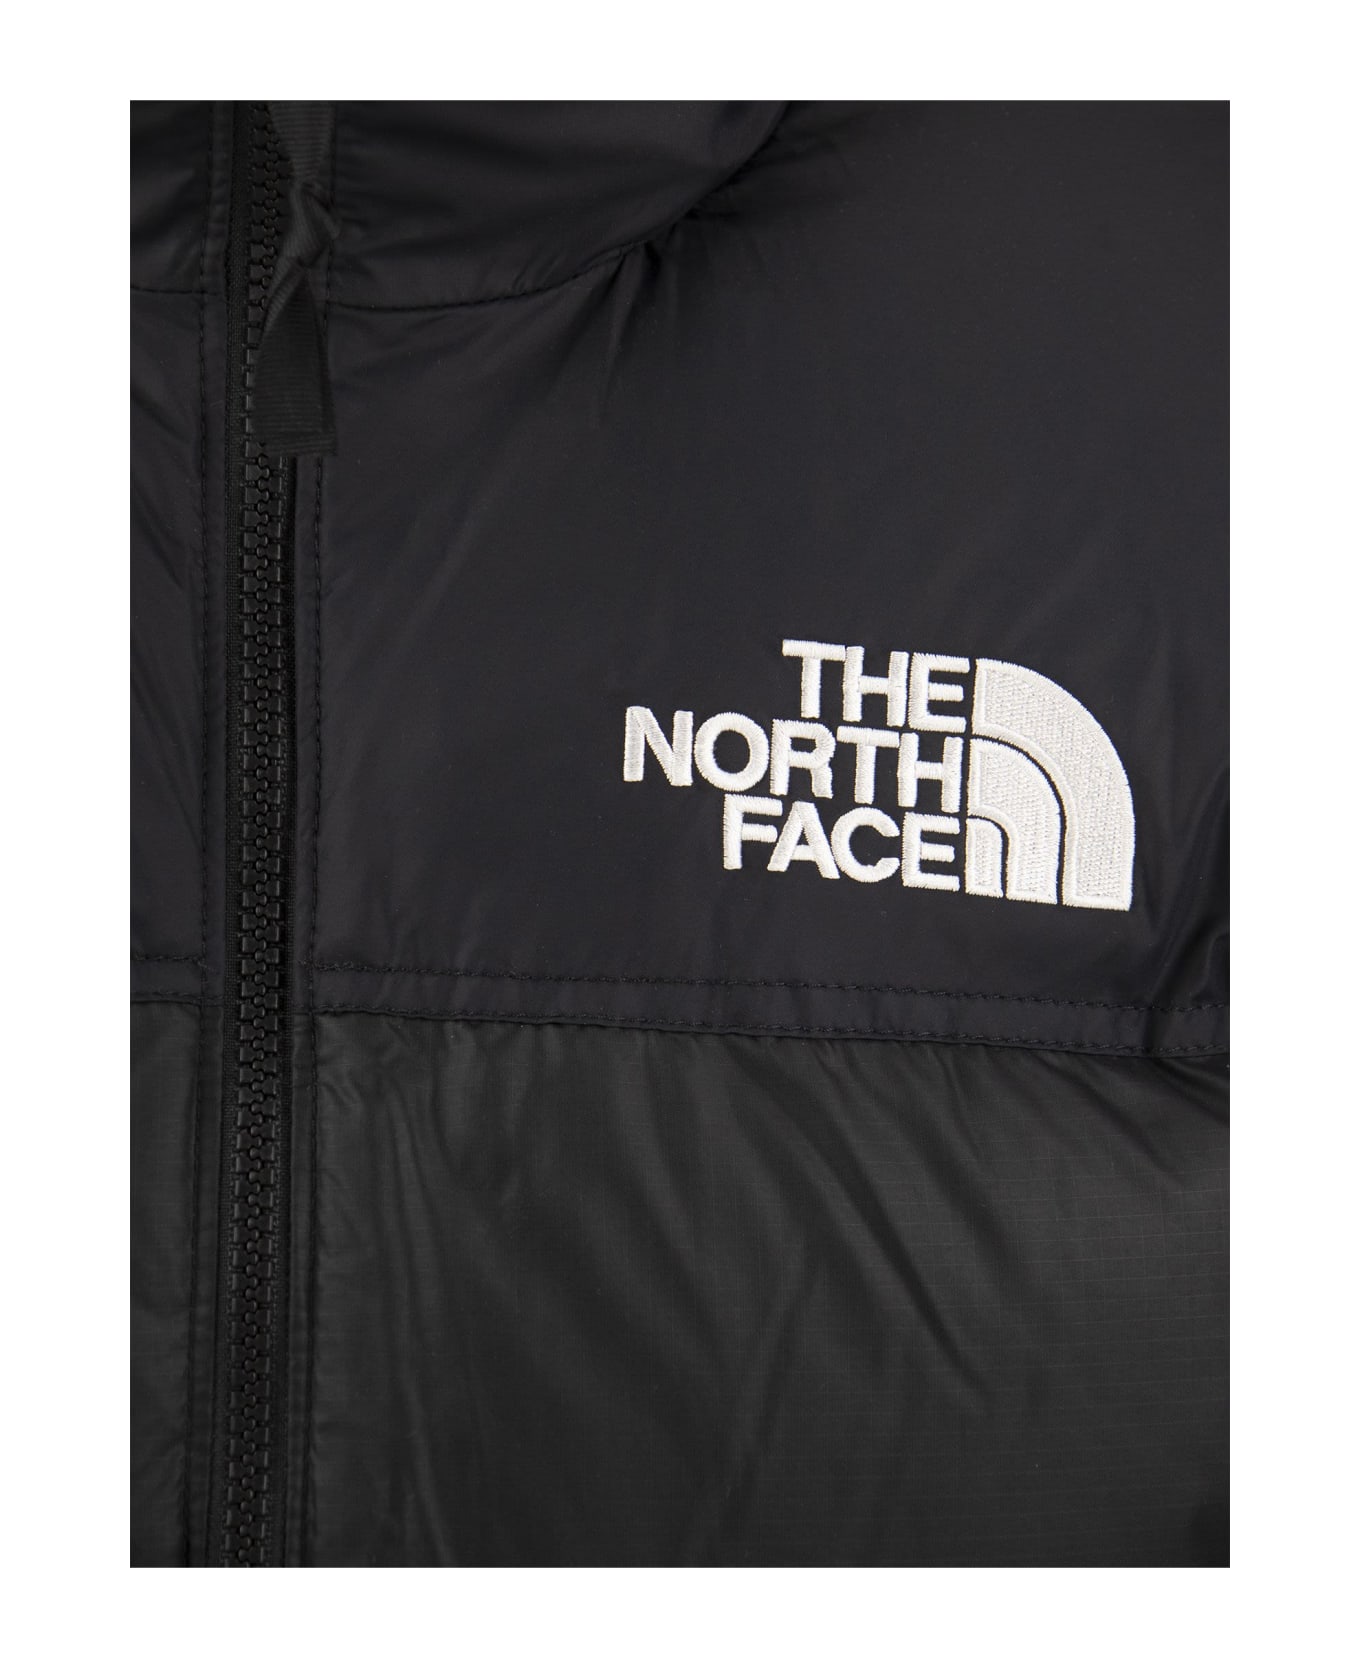 The North Face 1996 Retro Nuptse - Folding Jacket - Black ダウンジャケット